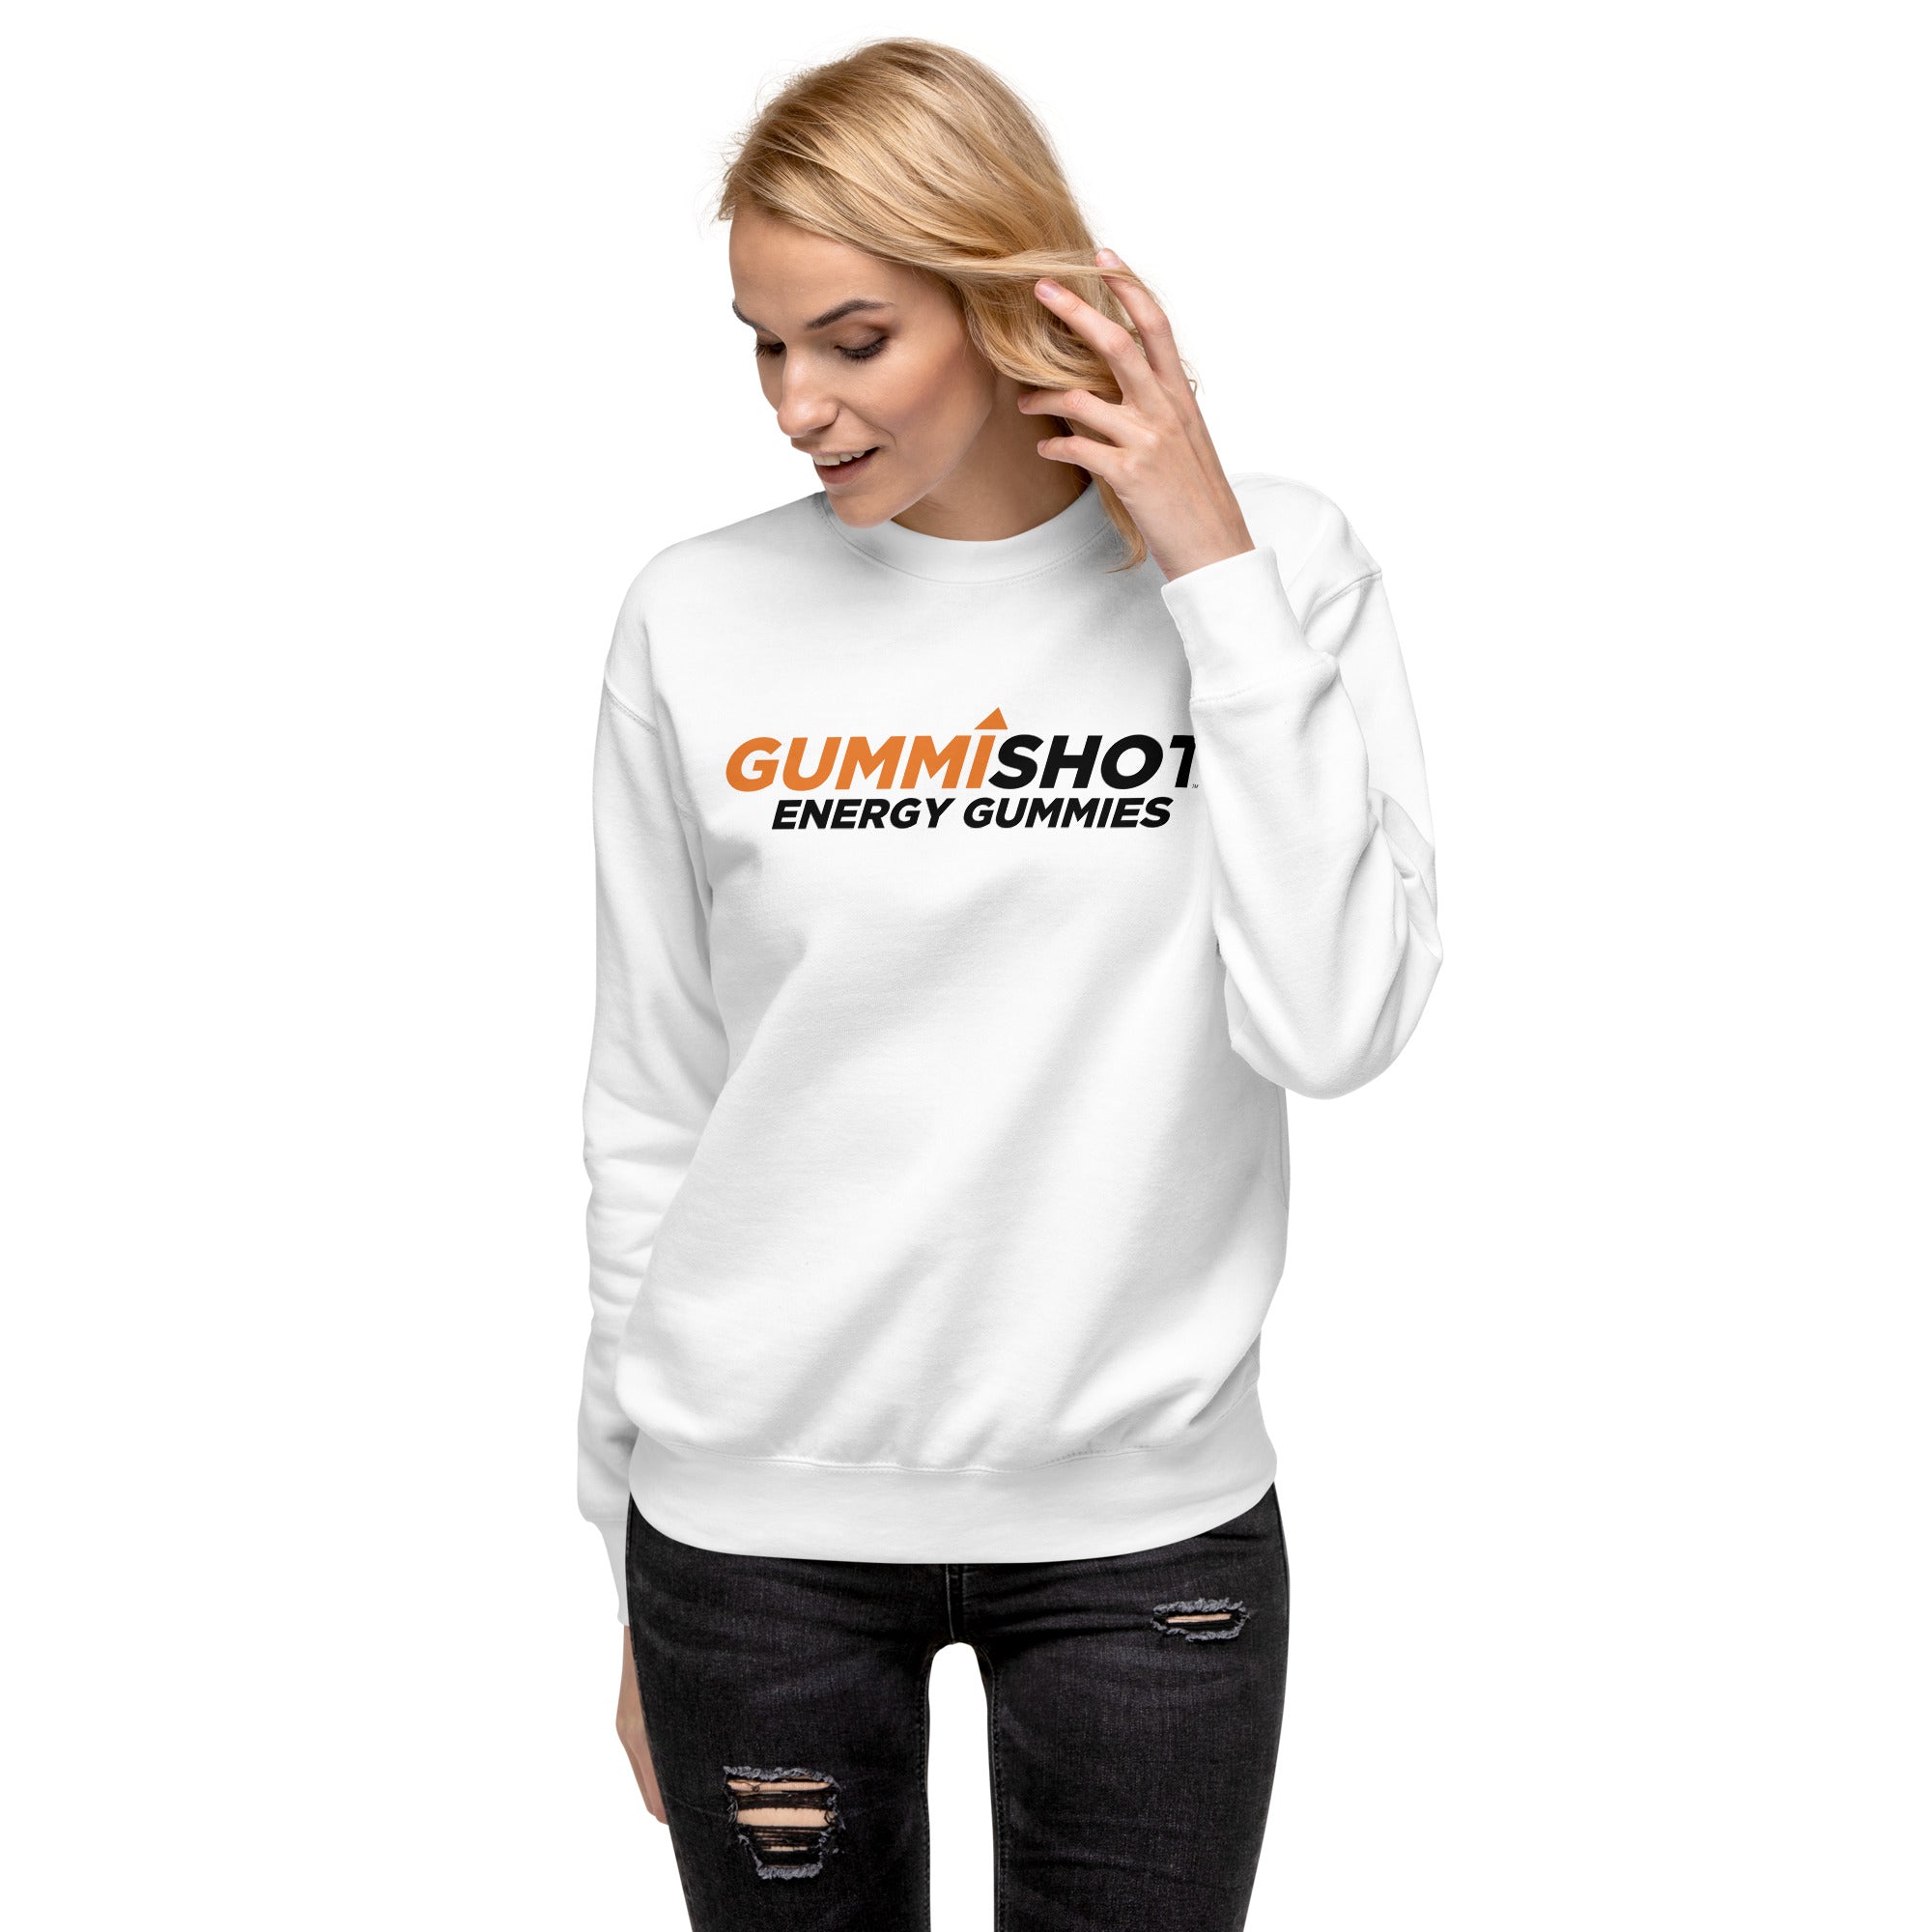 GummiShot Crew Sweatshirt